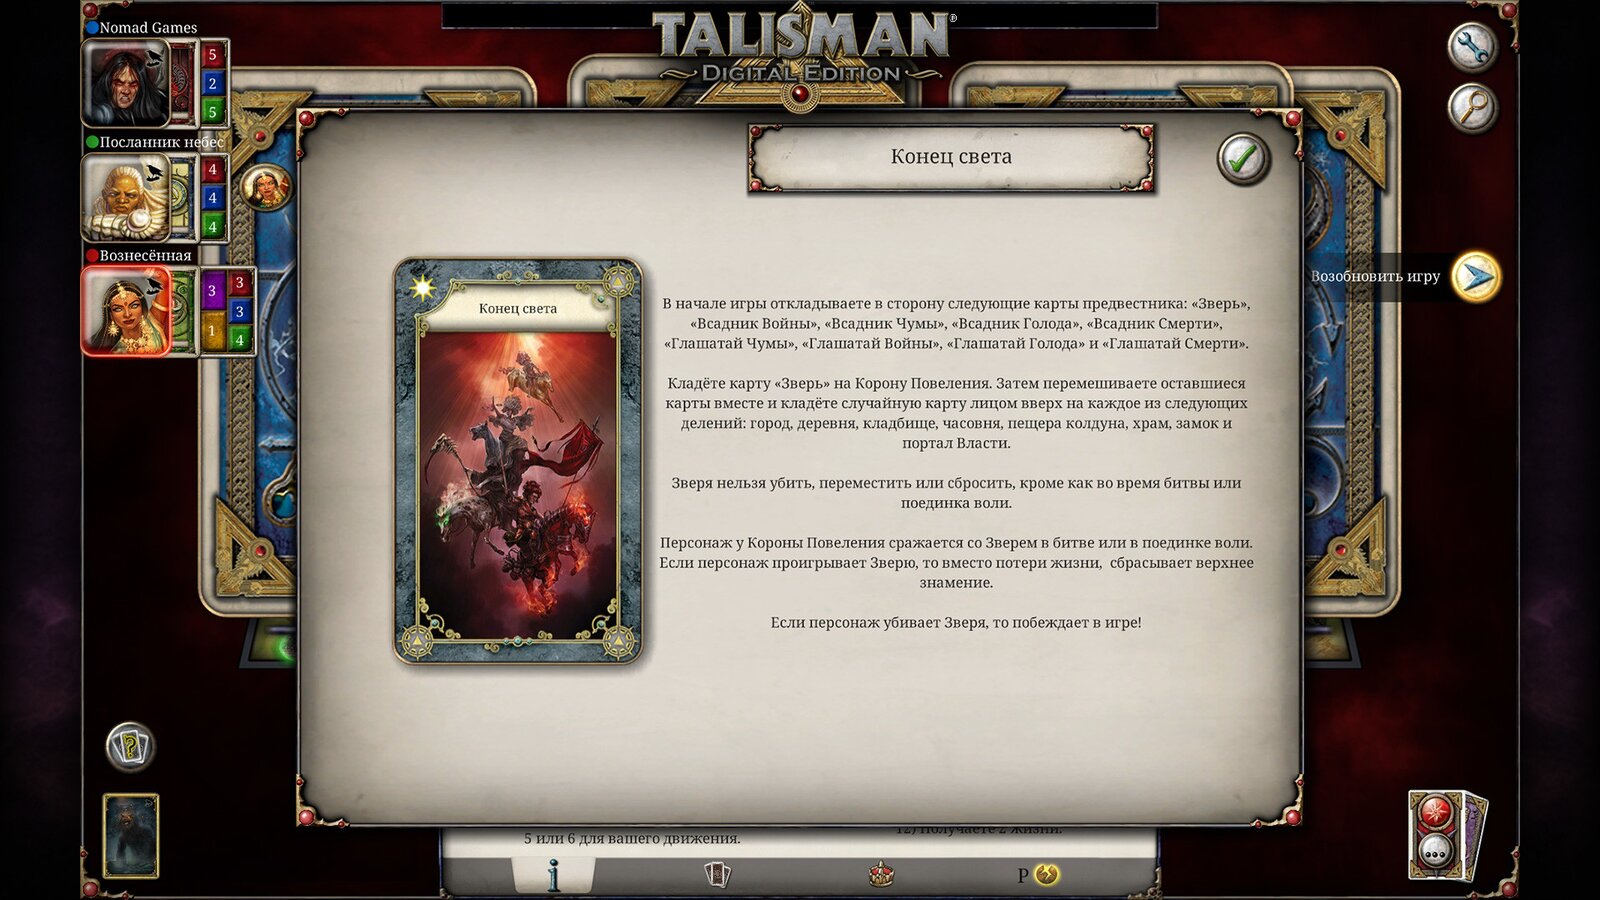 Talisman: Digital Edition - The Harbinger Expansion